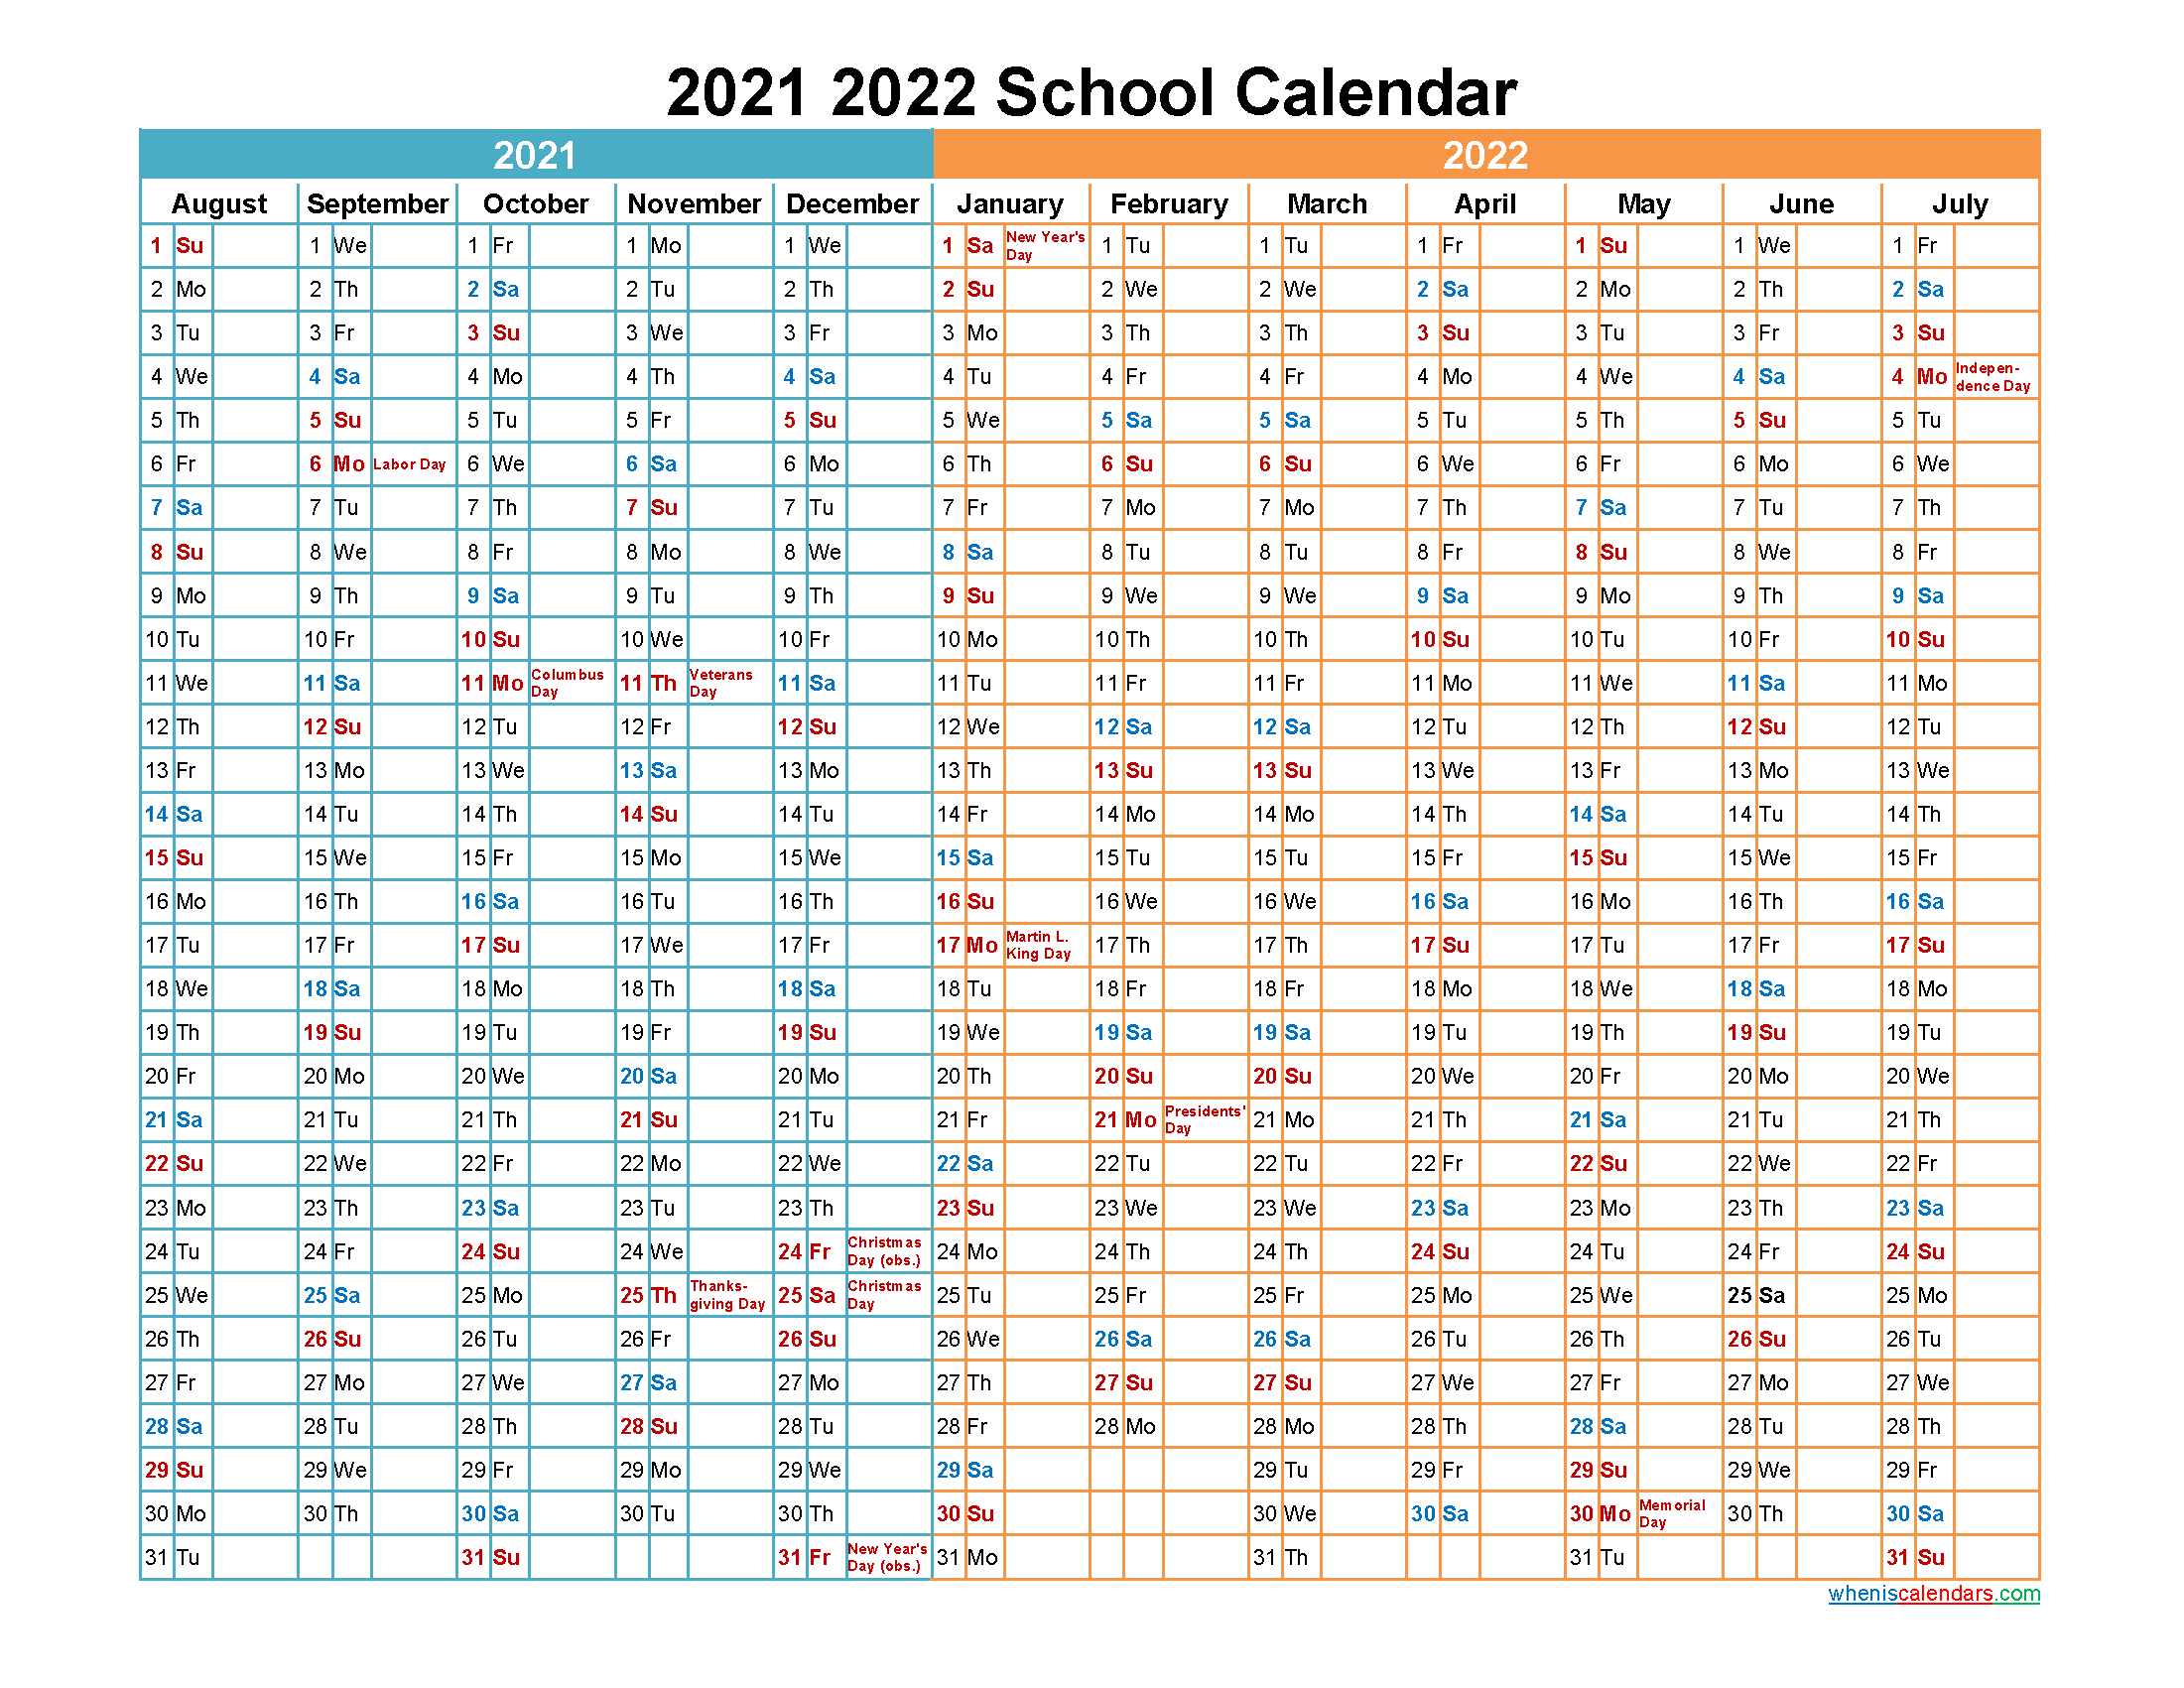 2021 and 2022 School Calendar Printable - Template No.22scl18